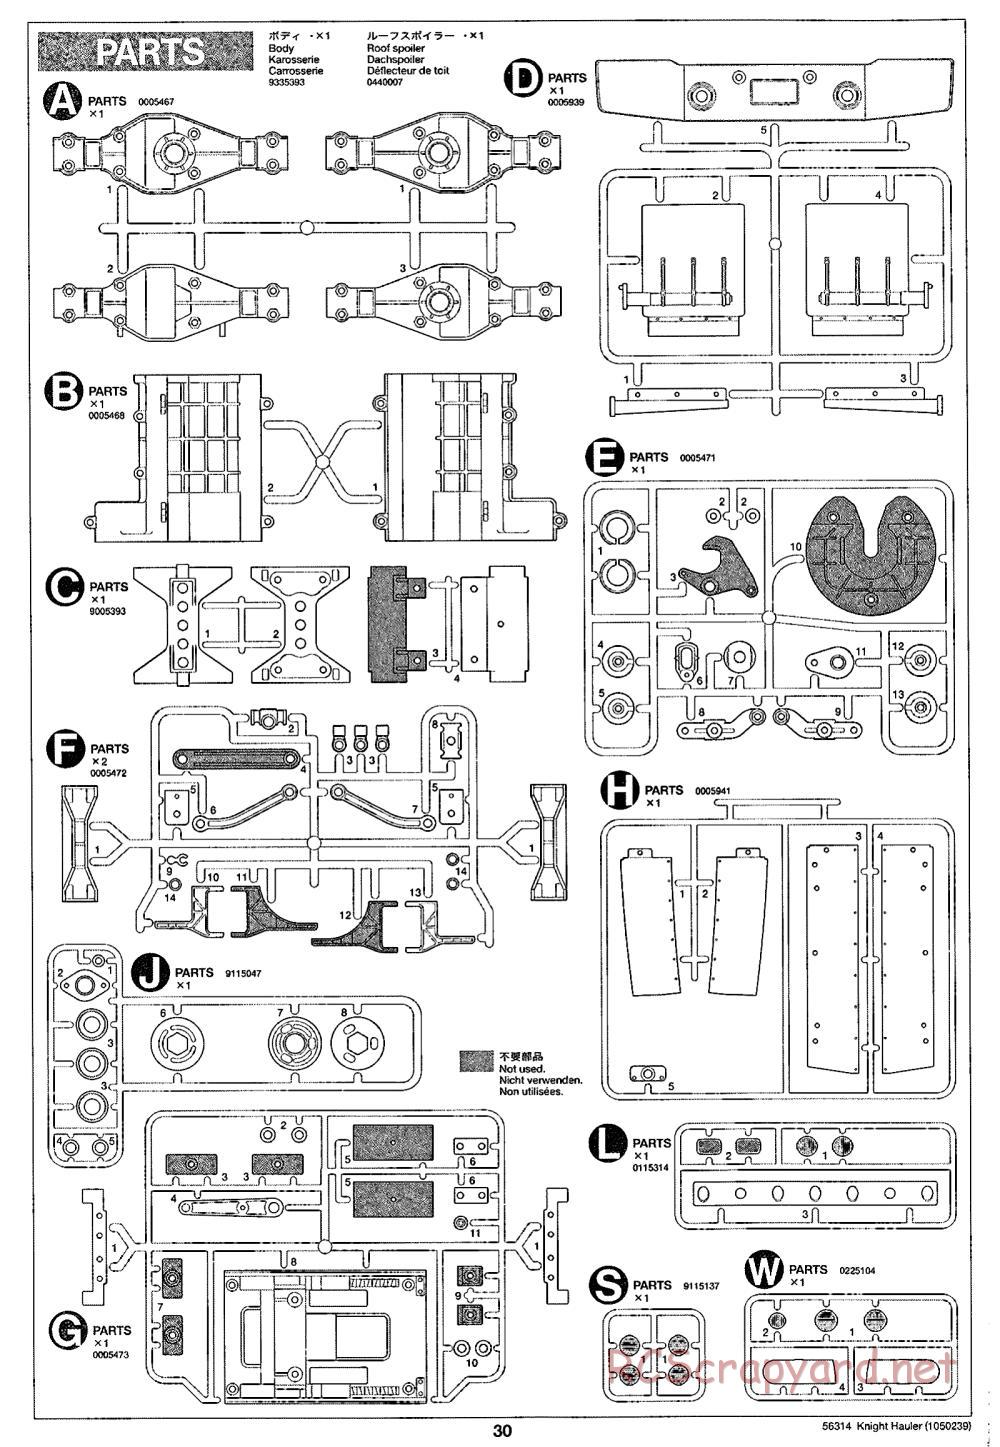 Tamiya - Knight Hauler Tractor Truck Chassis - Manual - Page 30